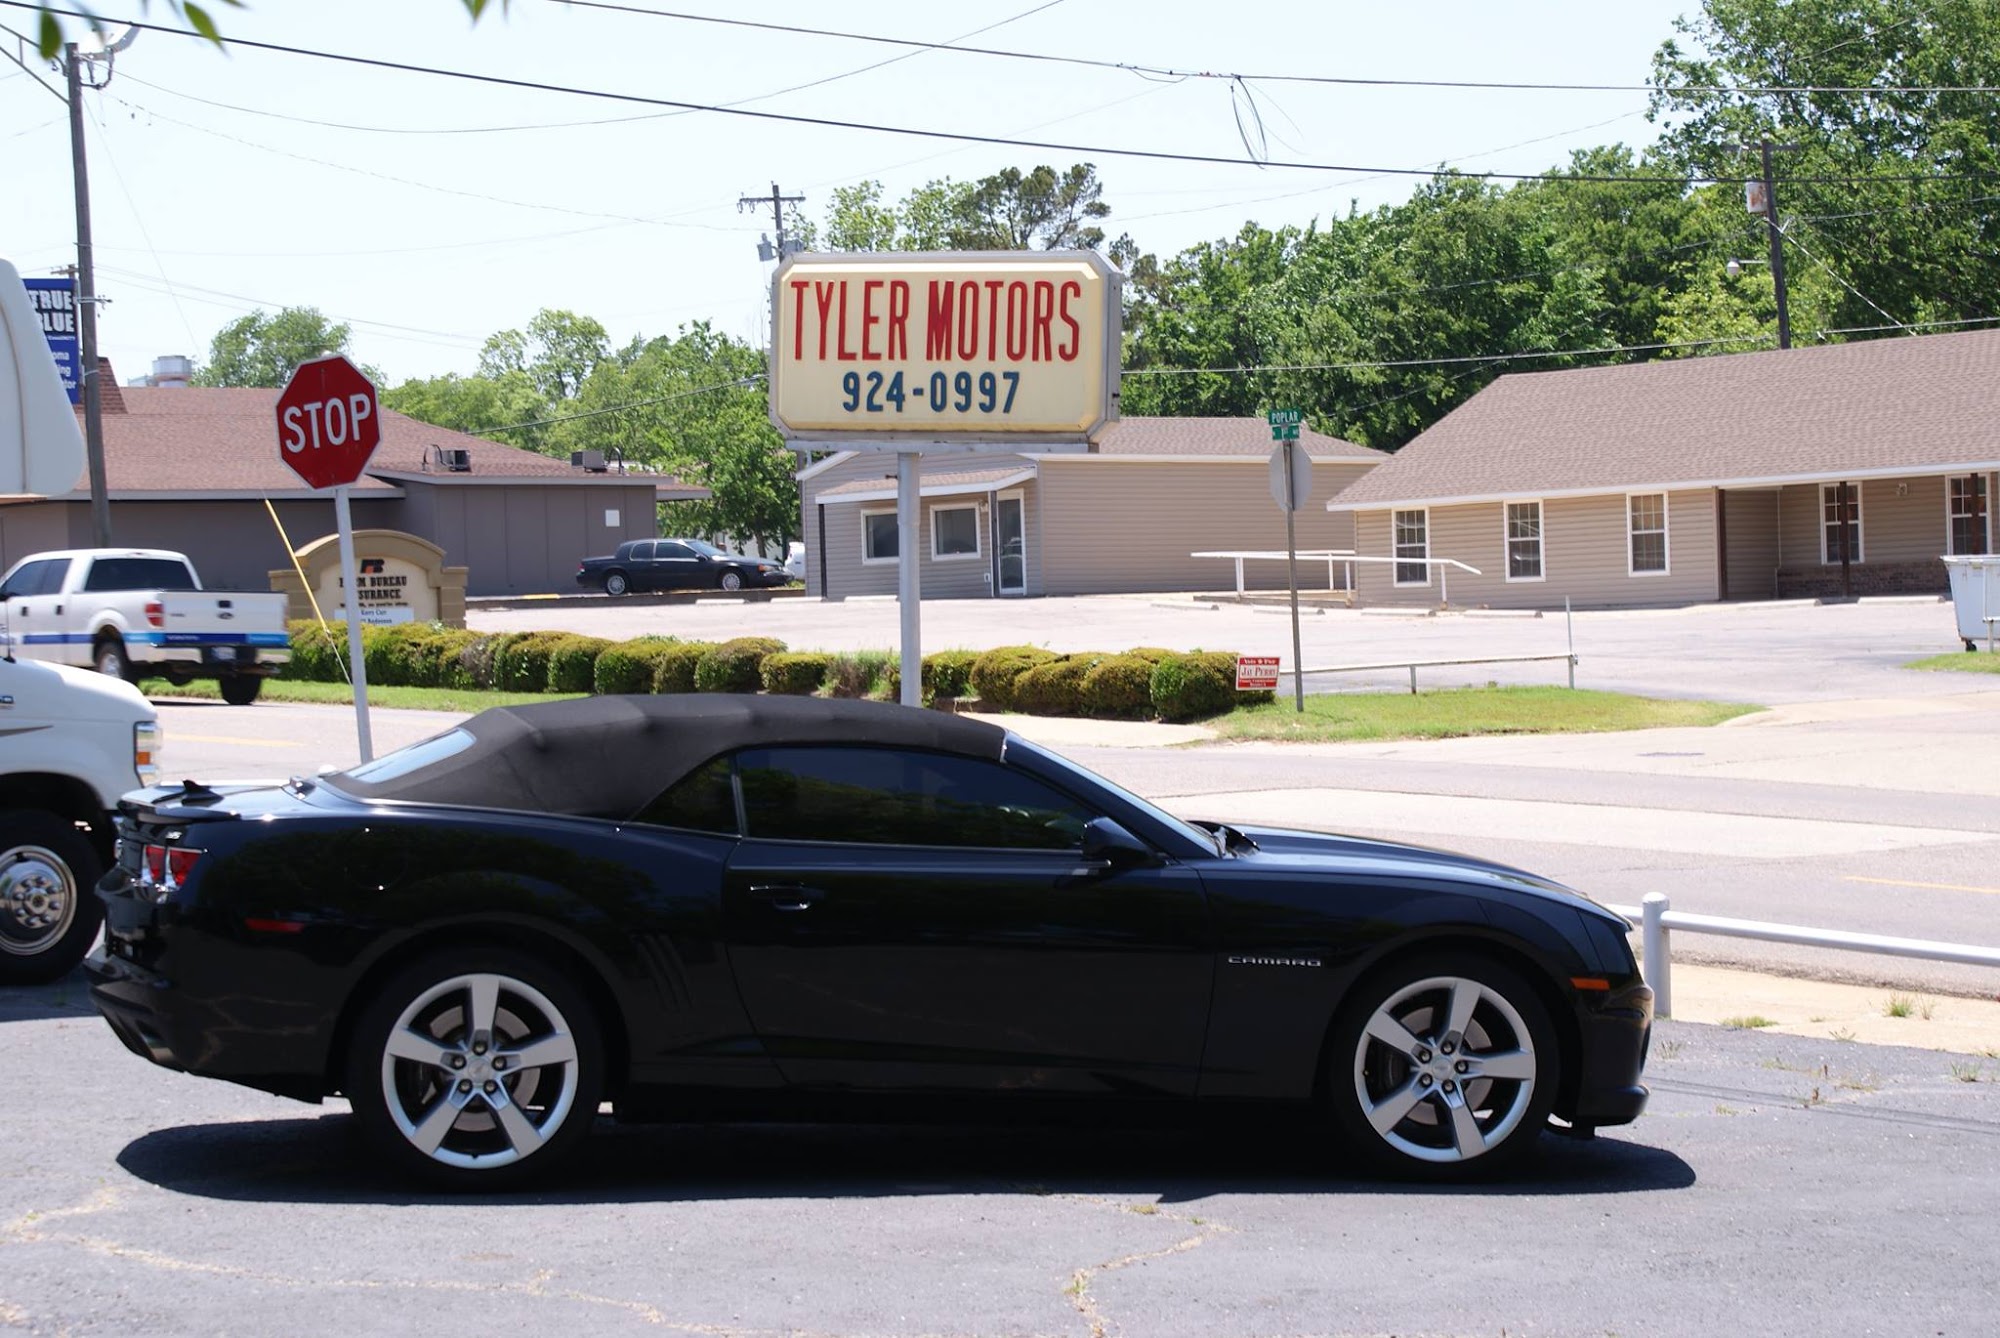 Tyler Motors